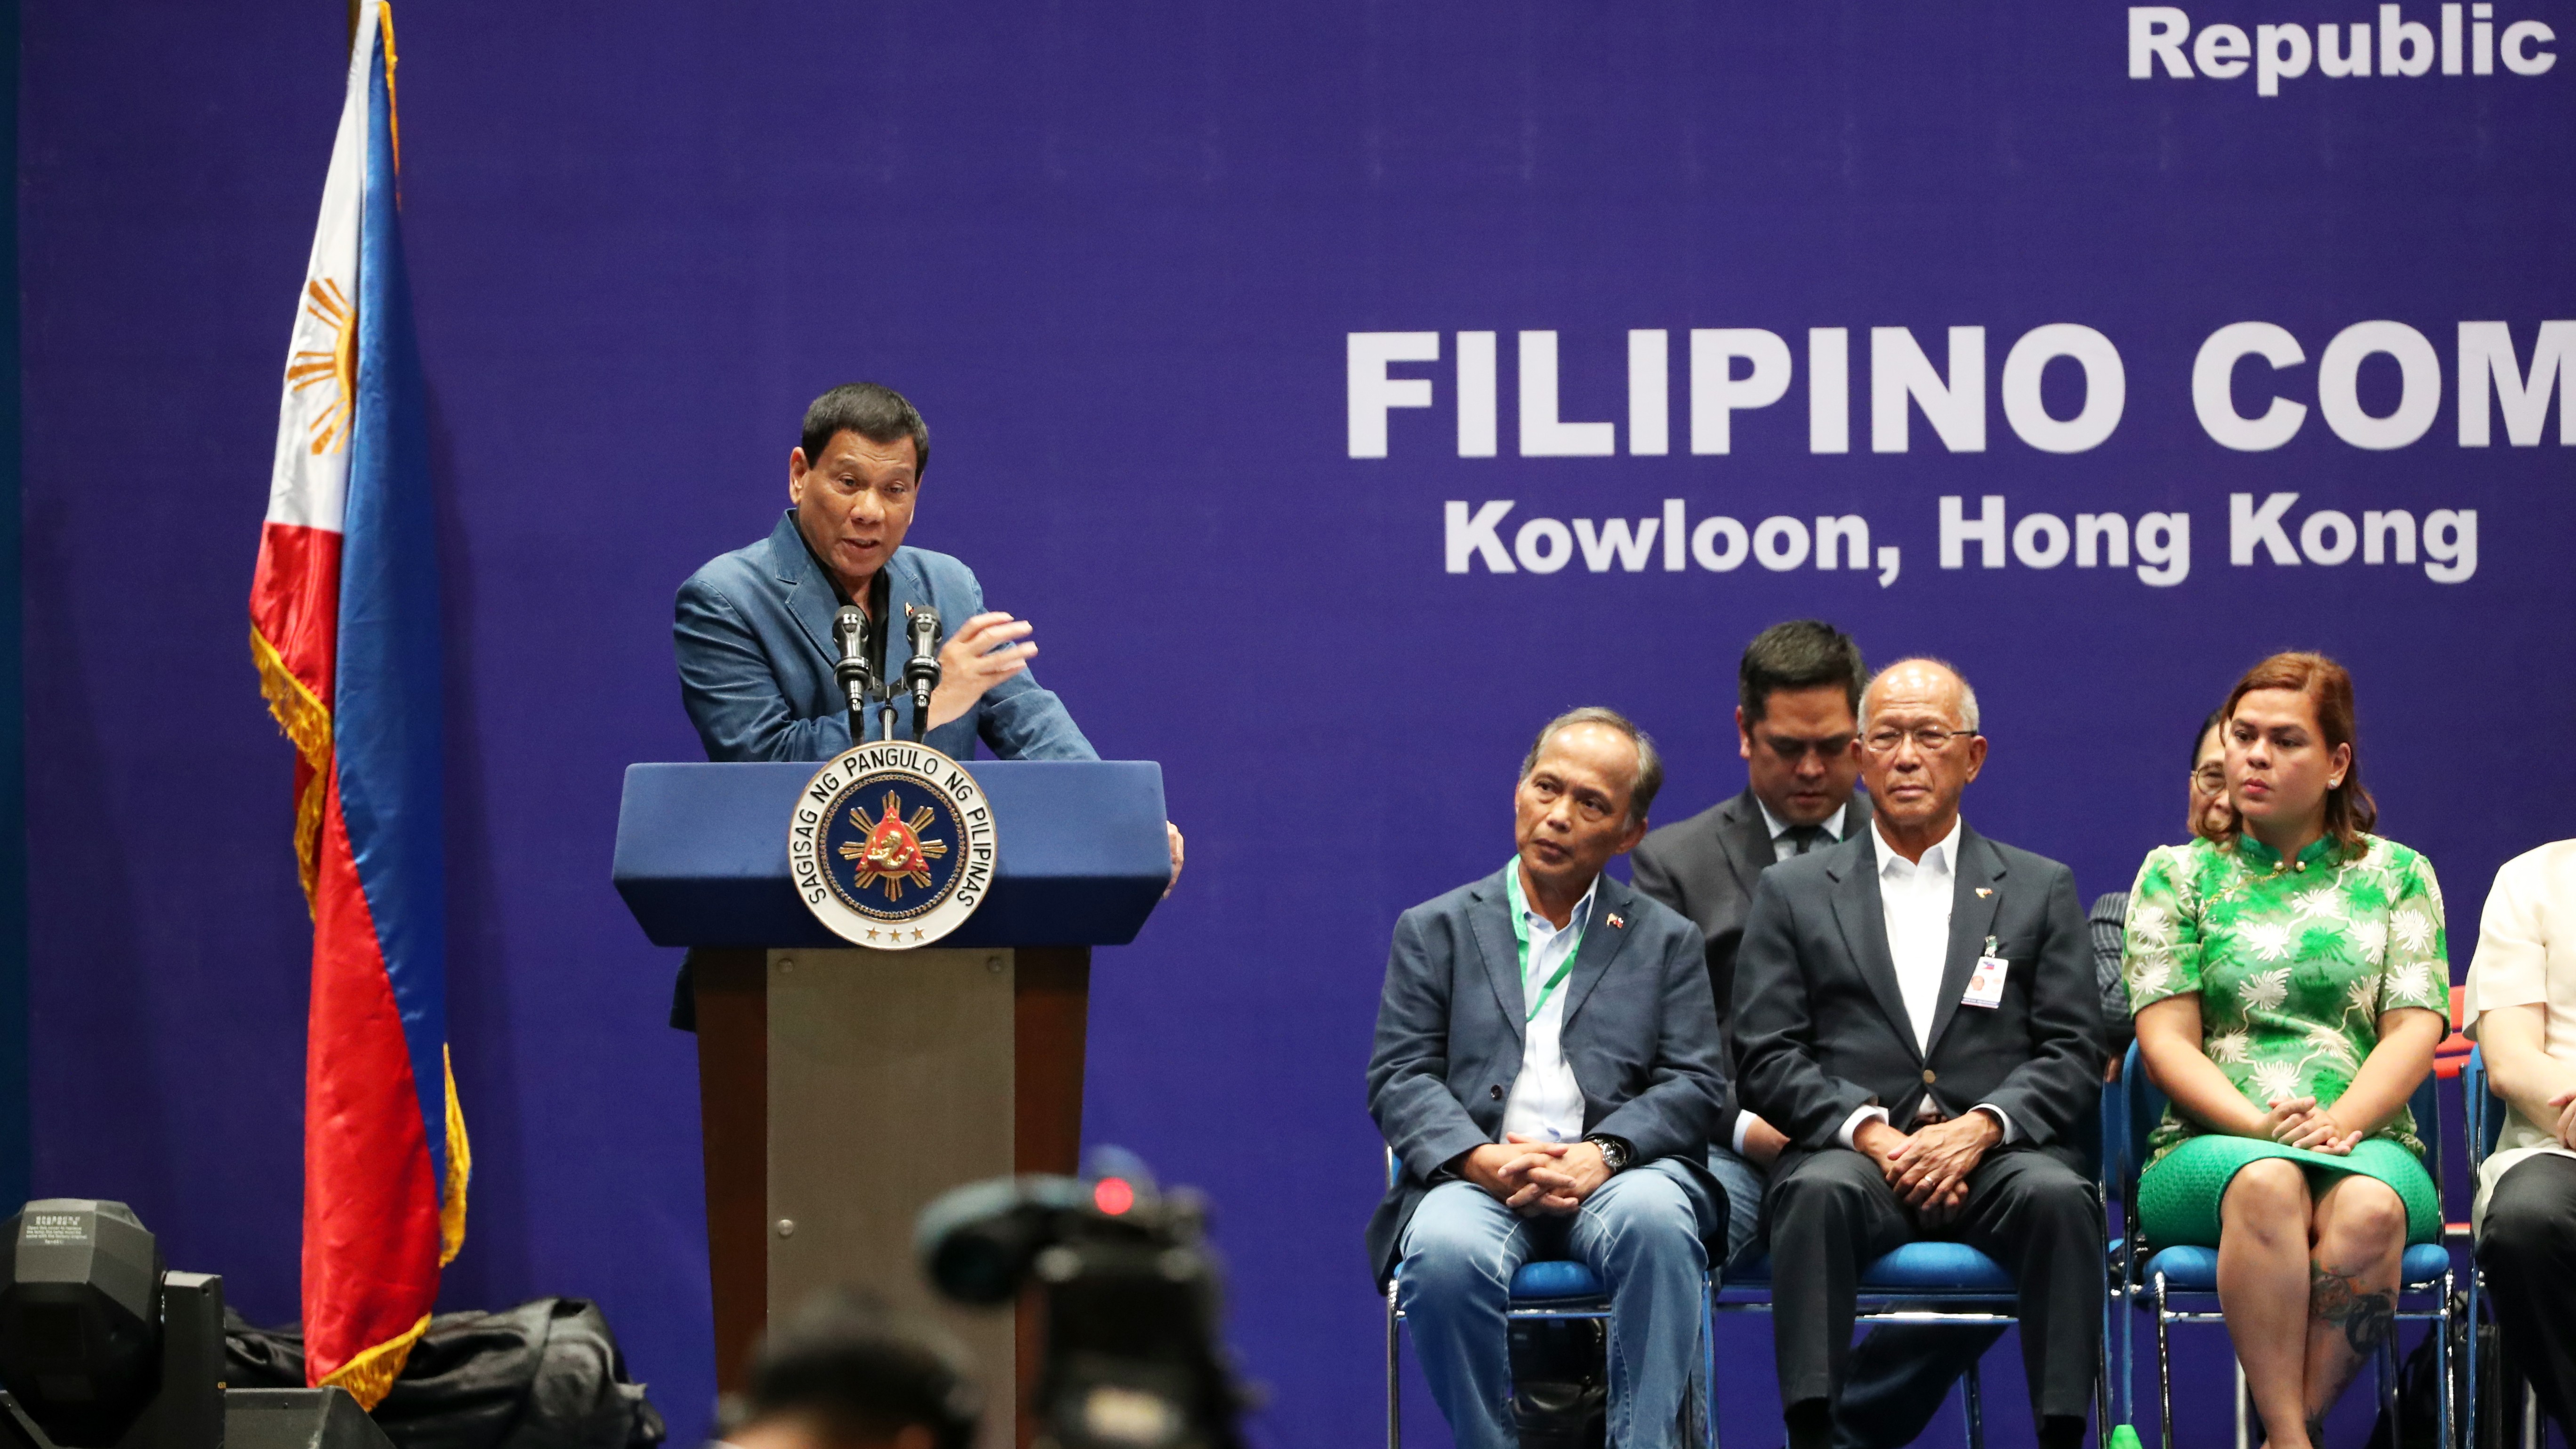 President Rodrigo Duterte meets the Filipino community at Kai Tak Cruise Terminal. Photo: K.Y. Cheng